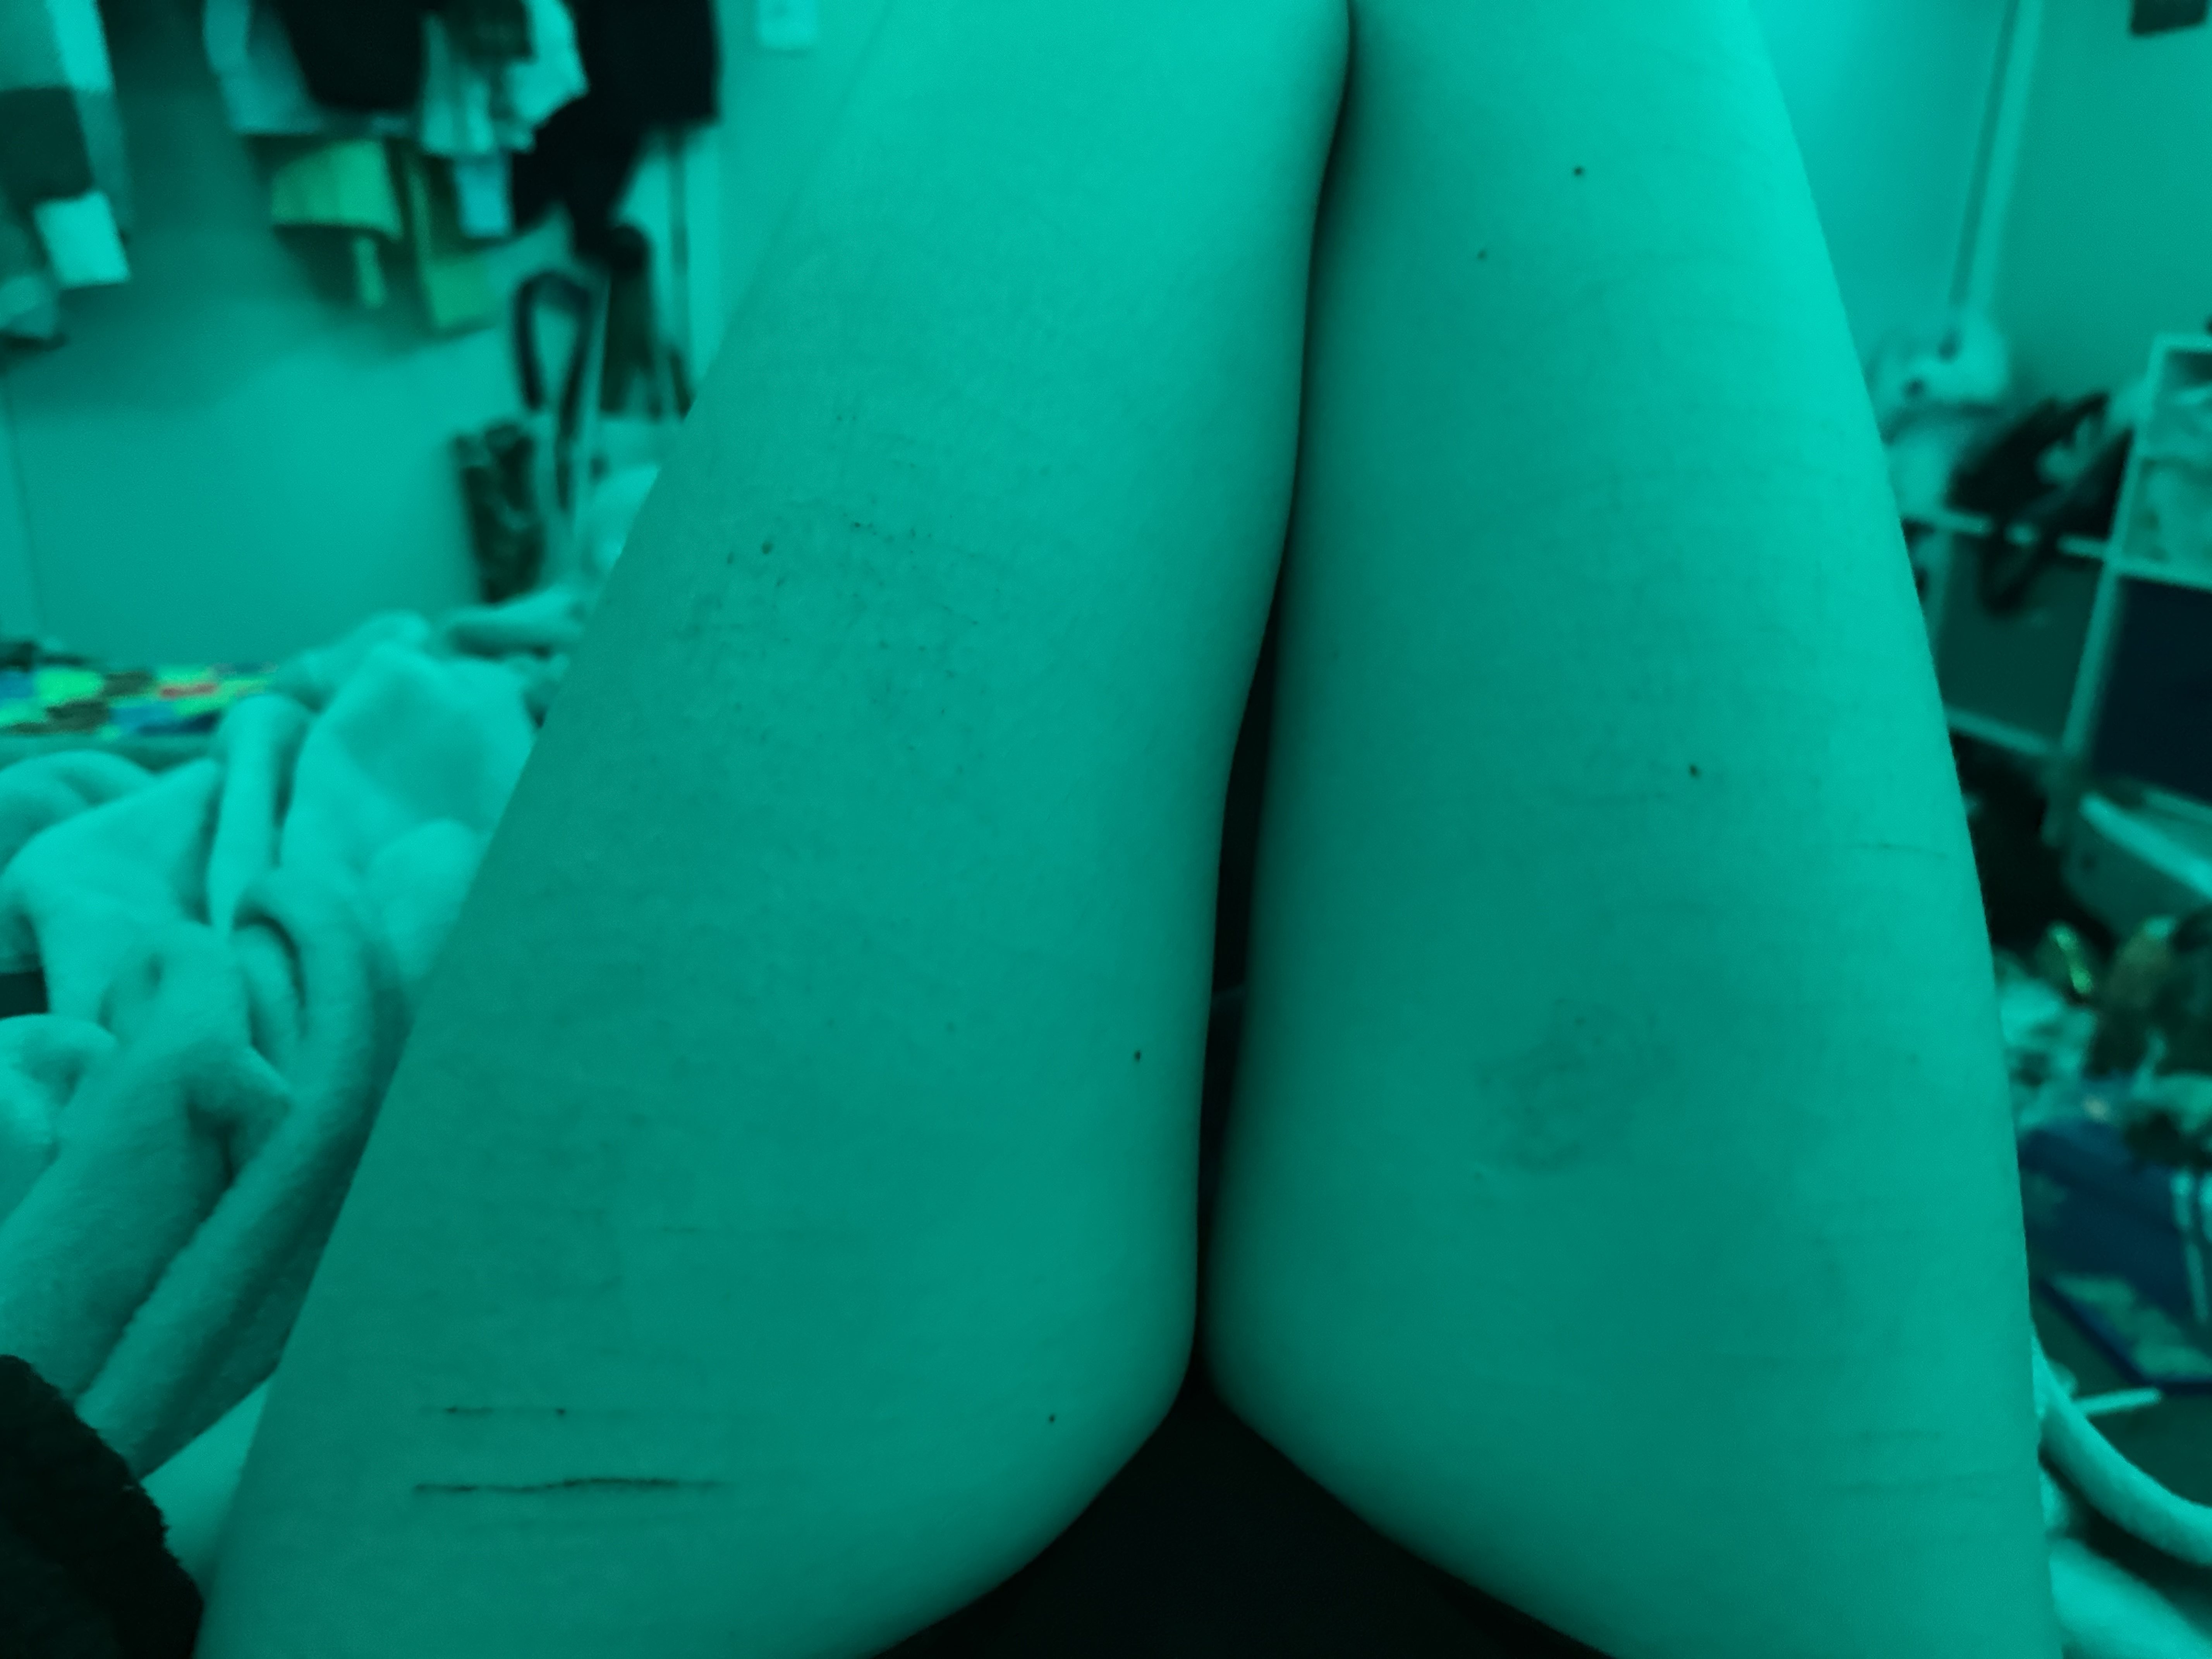 titties and ass